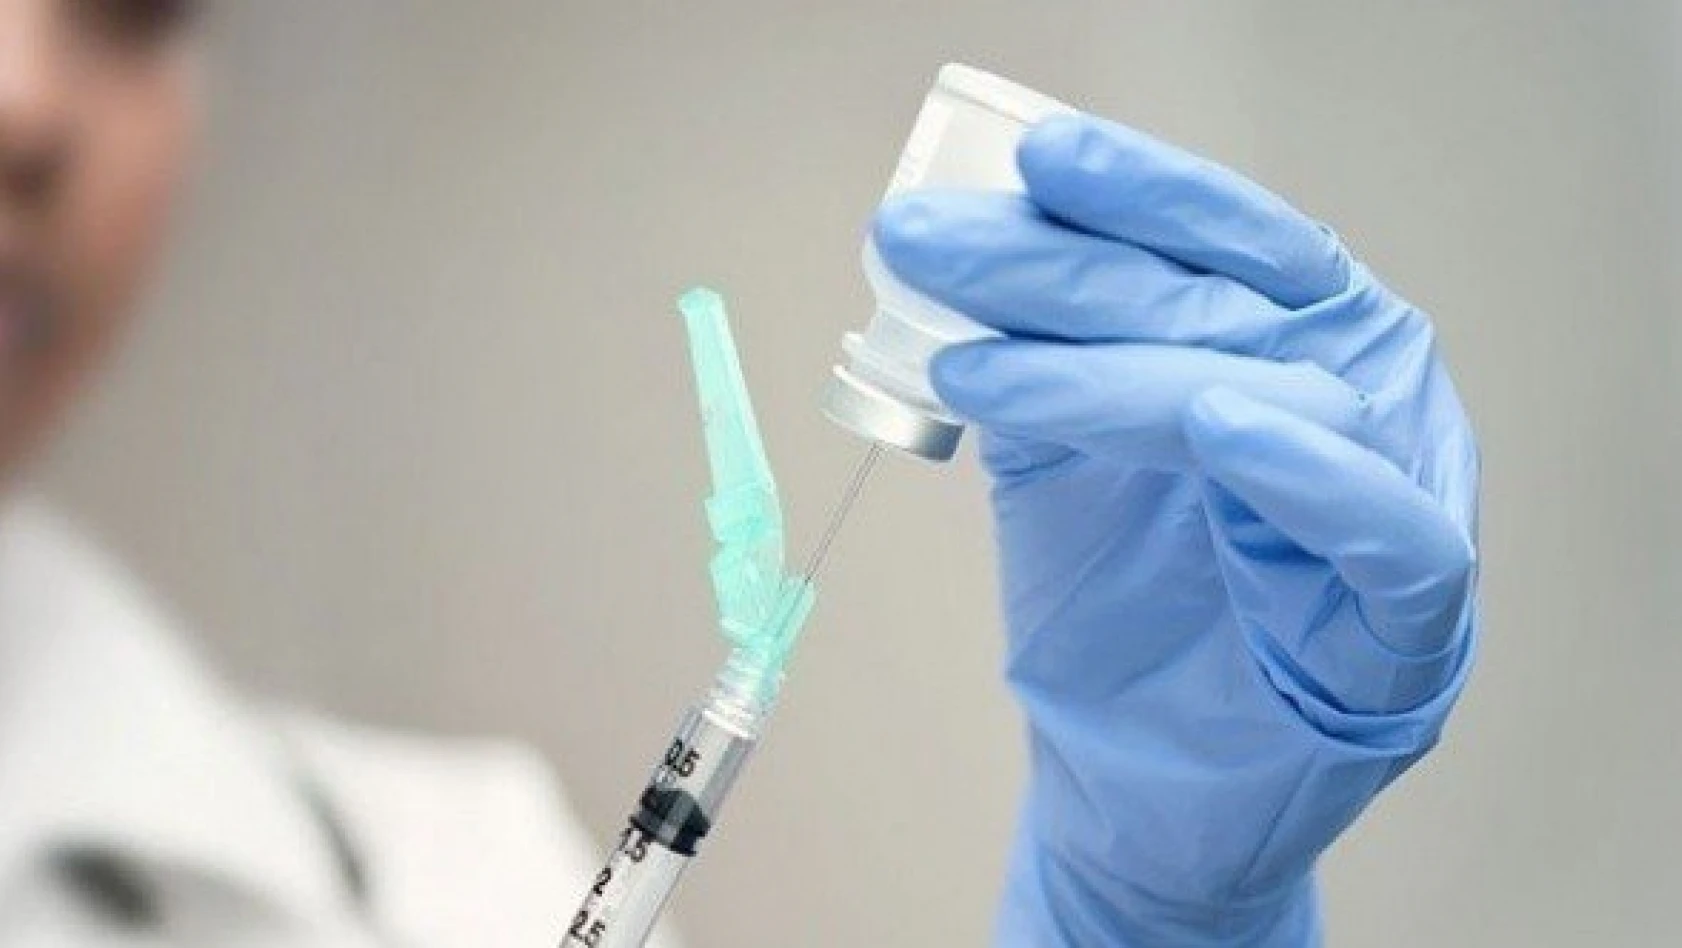 Rusya'da, Kovid-19 aşısının ilk parti üretiminin dağıtımına başlandı